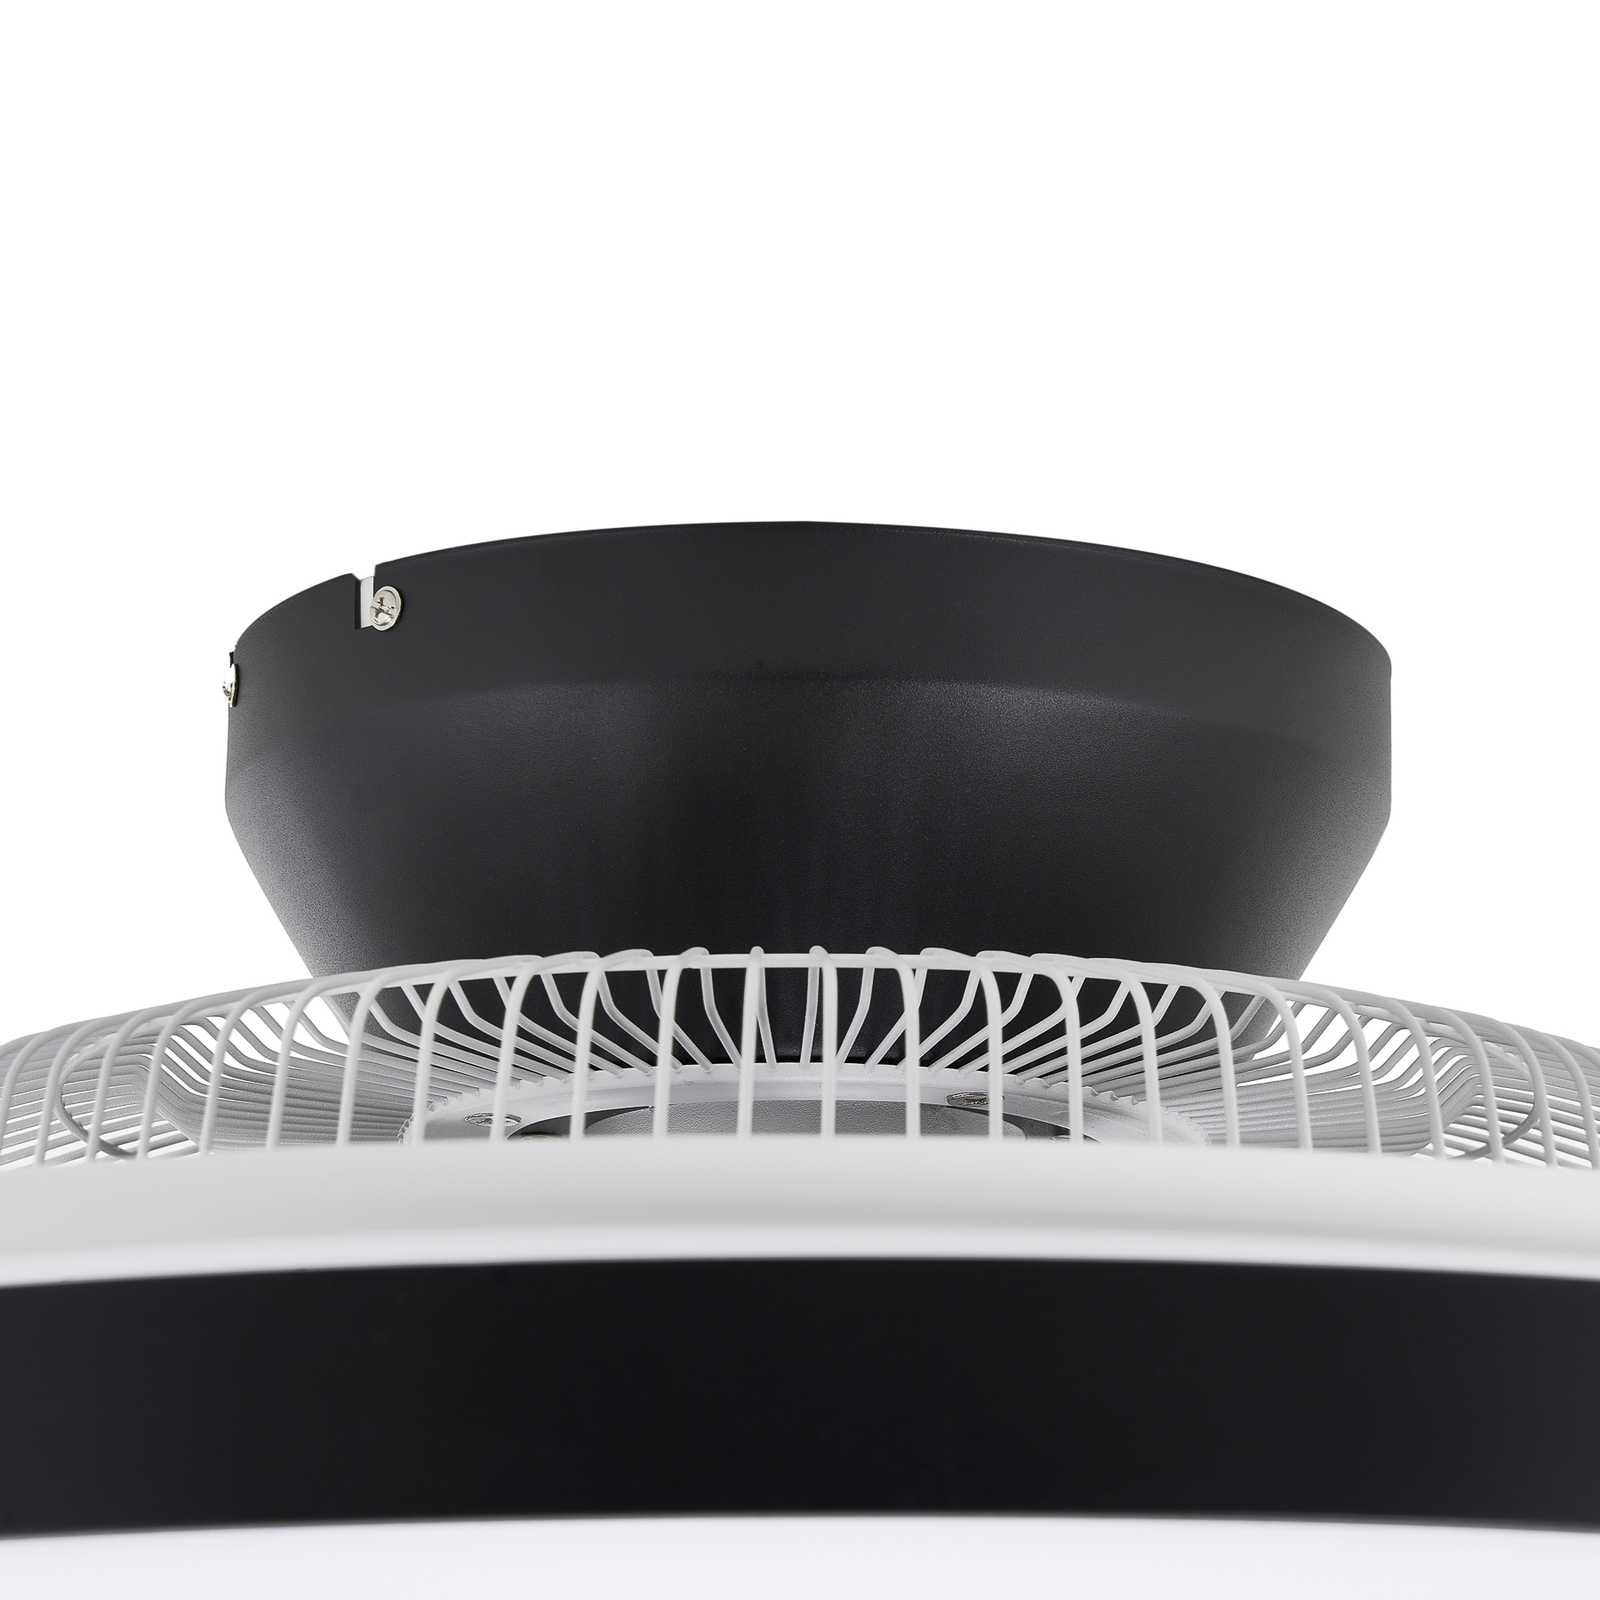 Starluna Orligo ventilateur plafond LED, noir mat